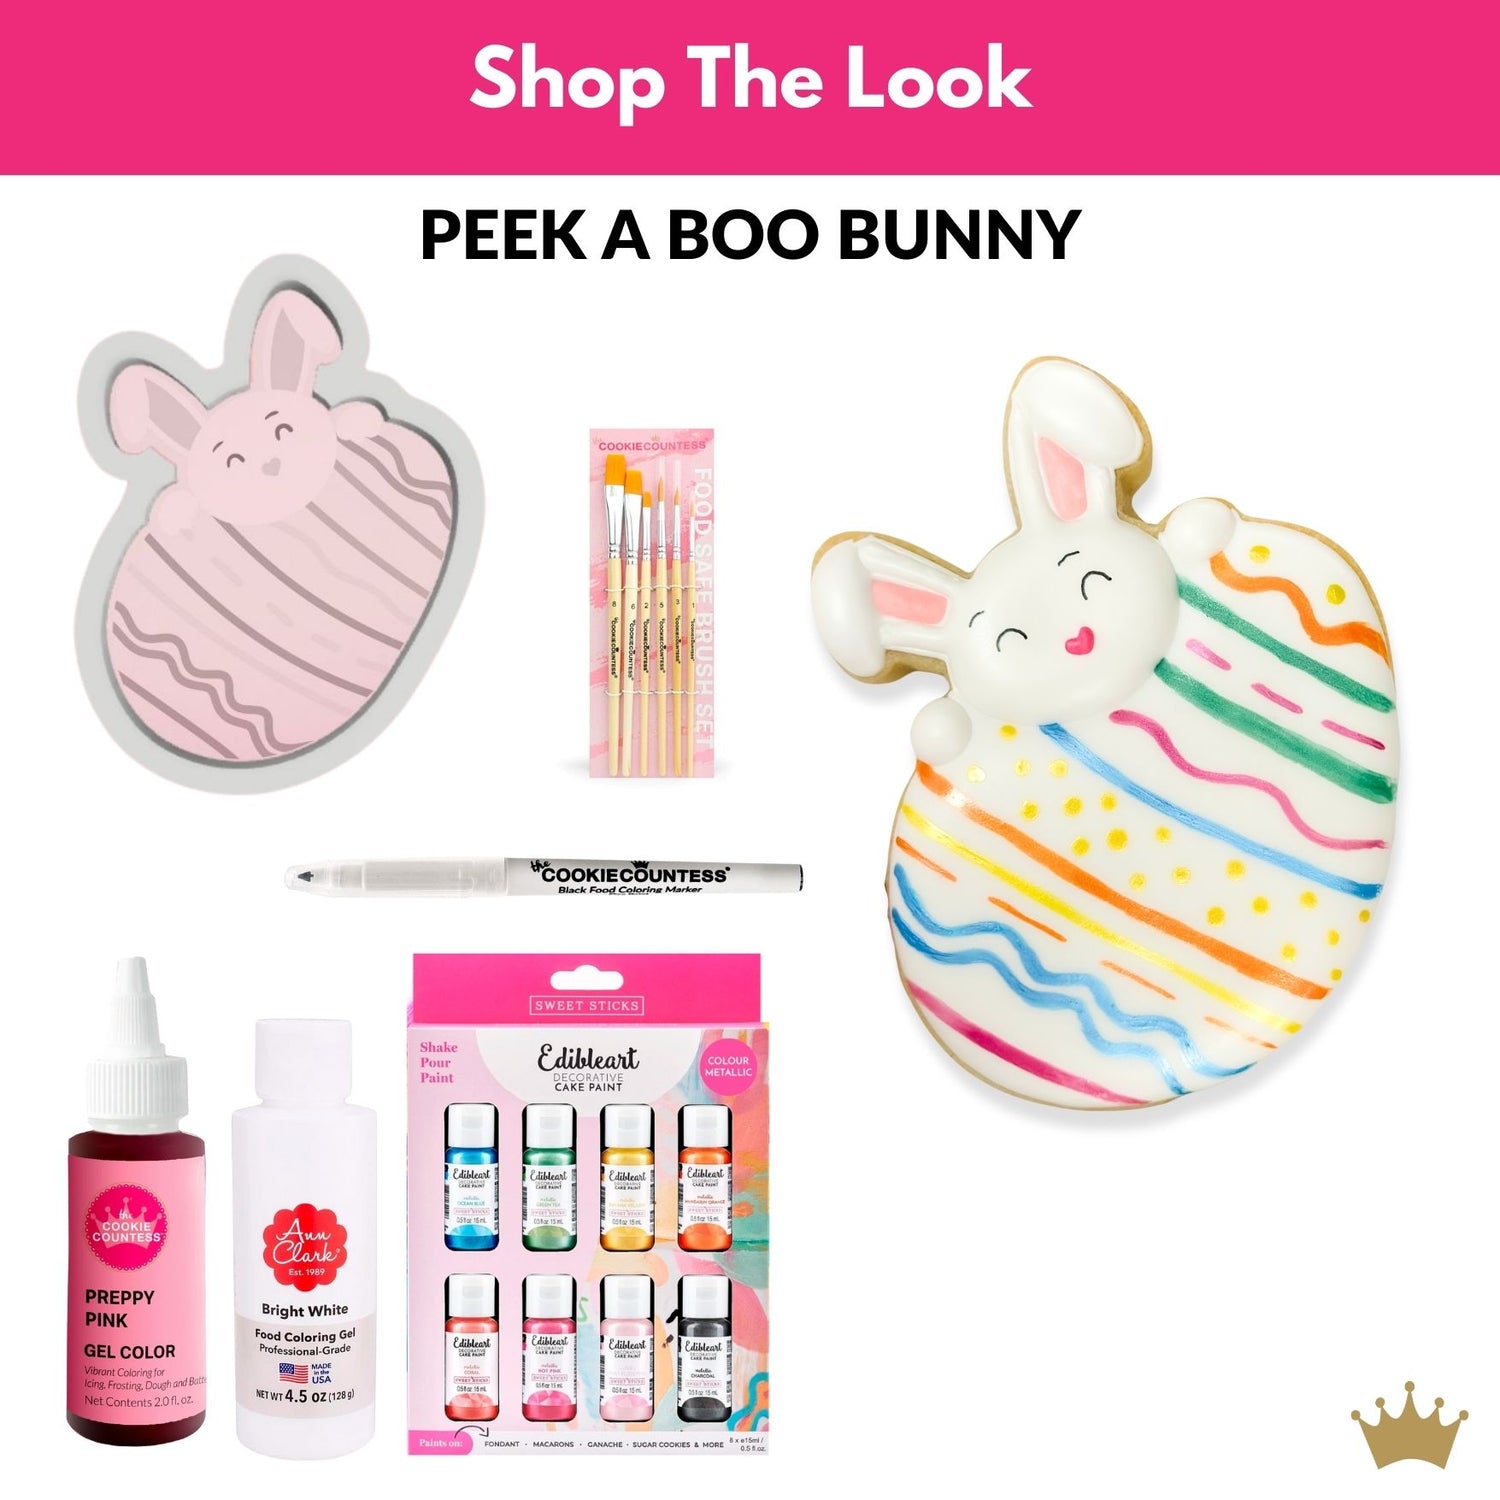 Peek A Boo Bunny